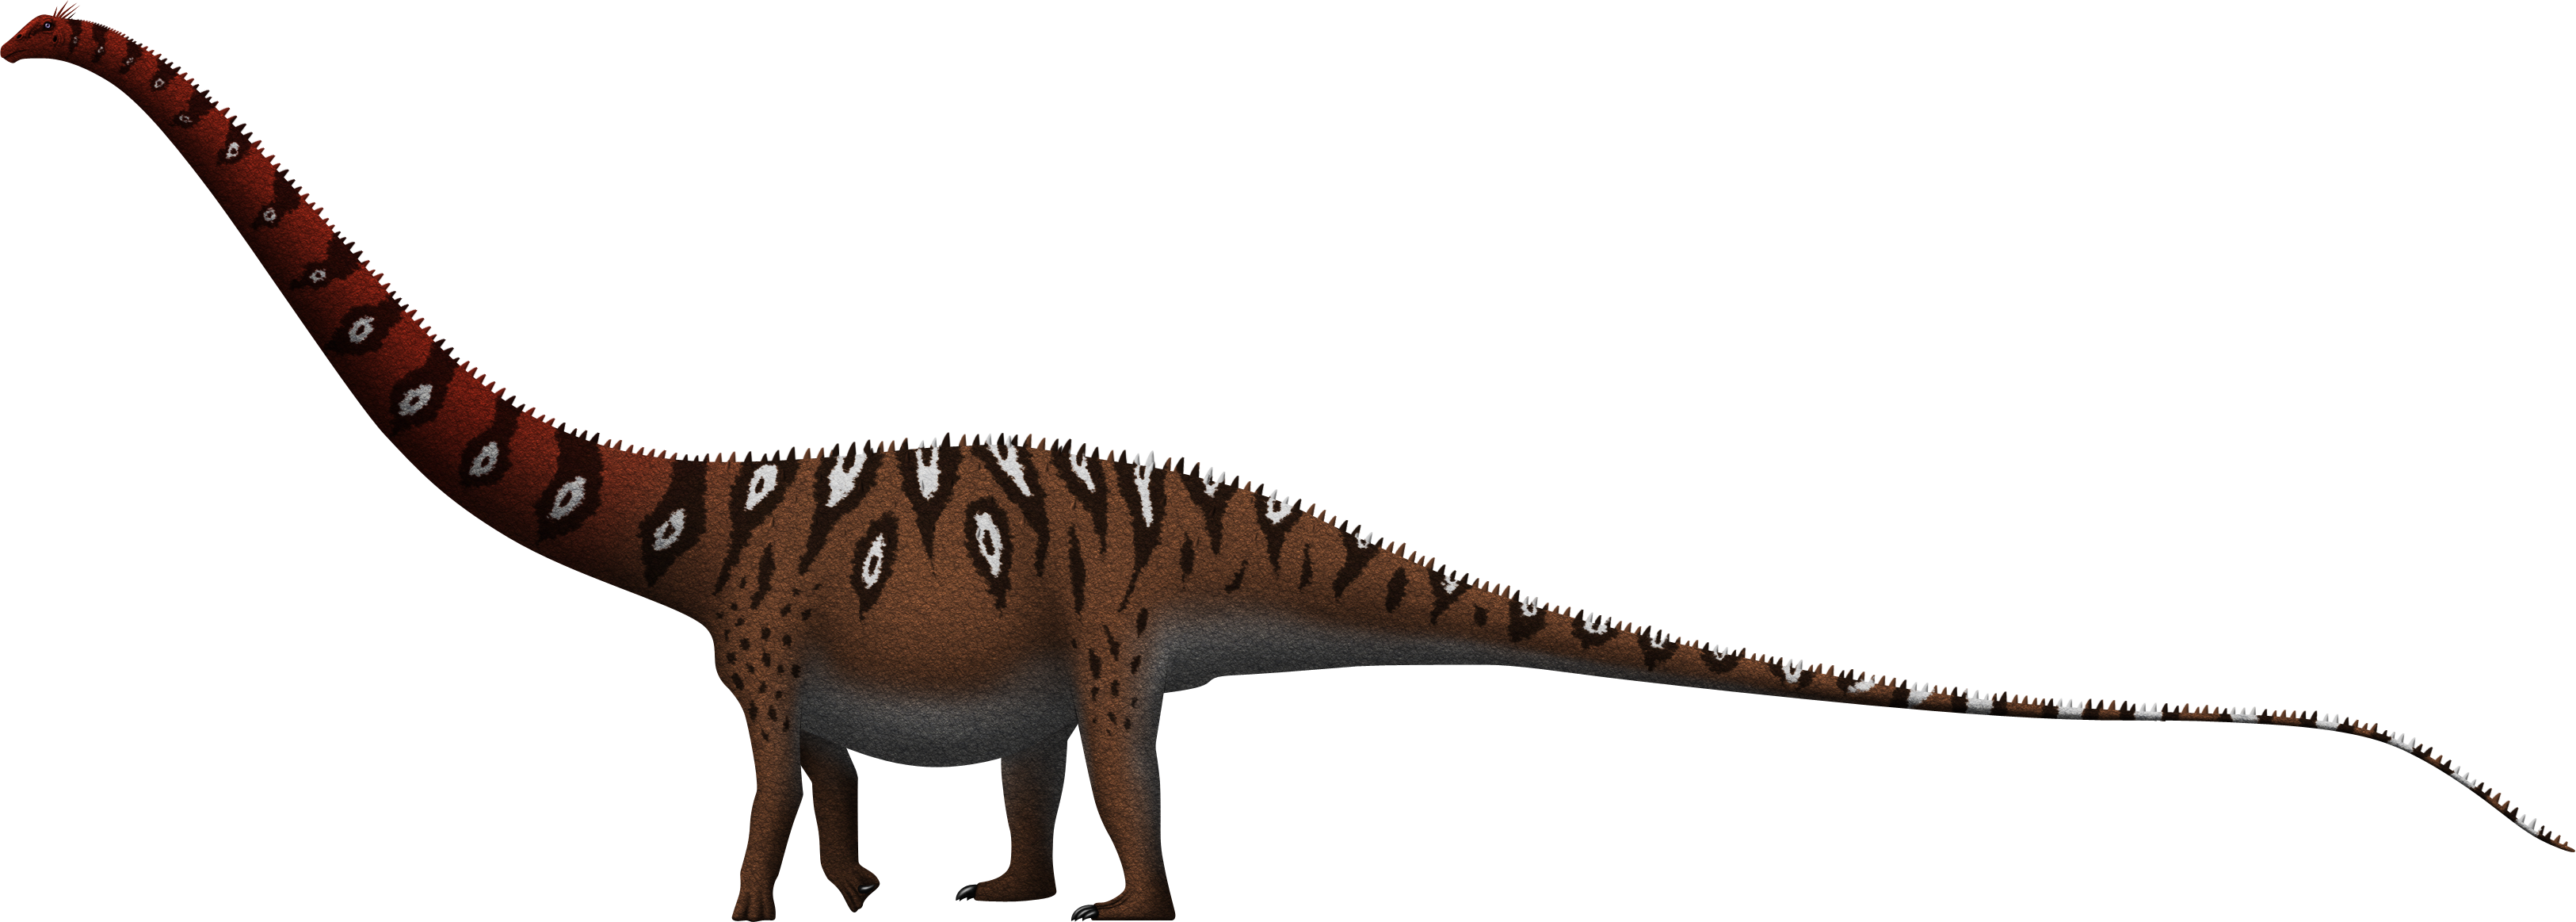 Supersaurus lourinhanensis